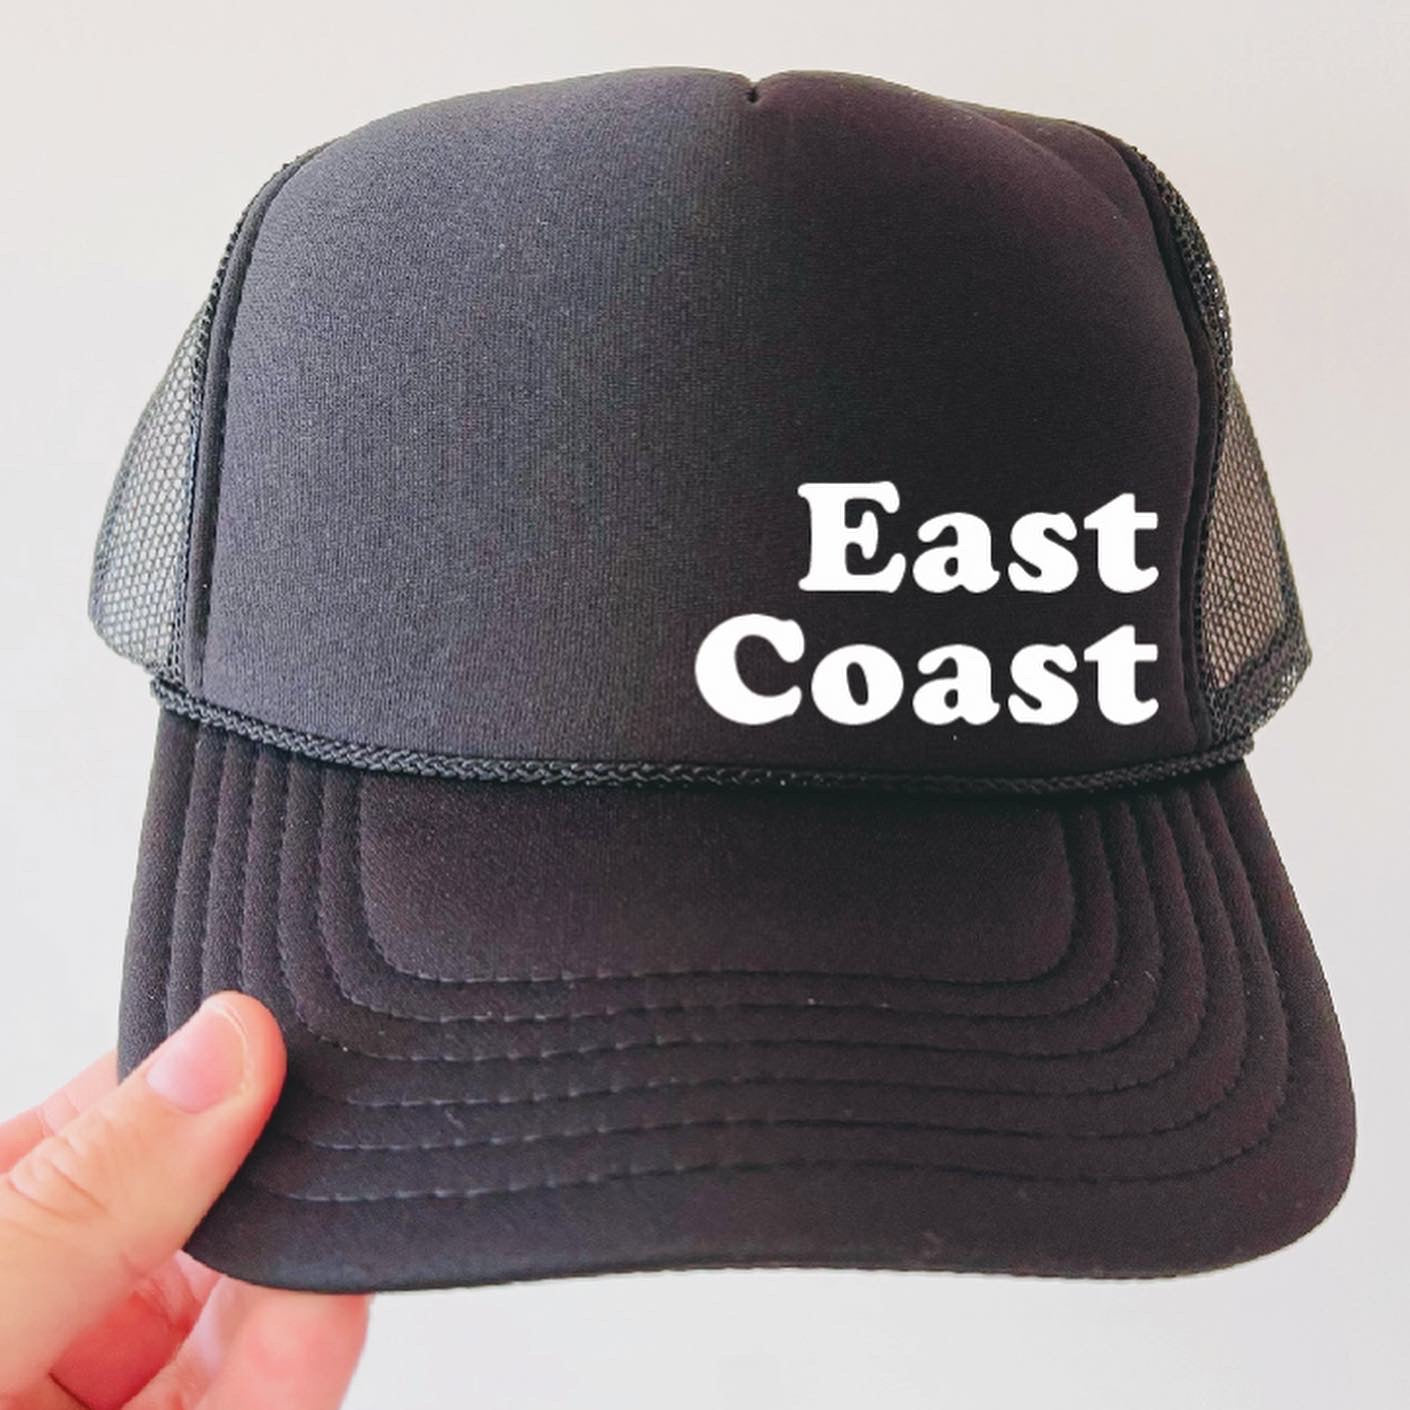 East Coast / West Coast